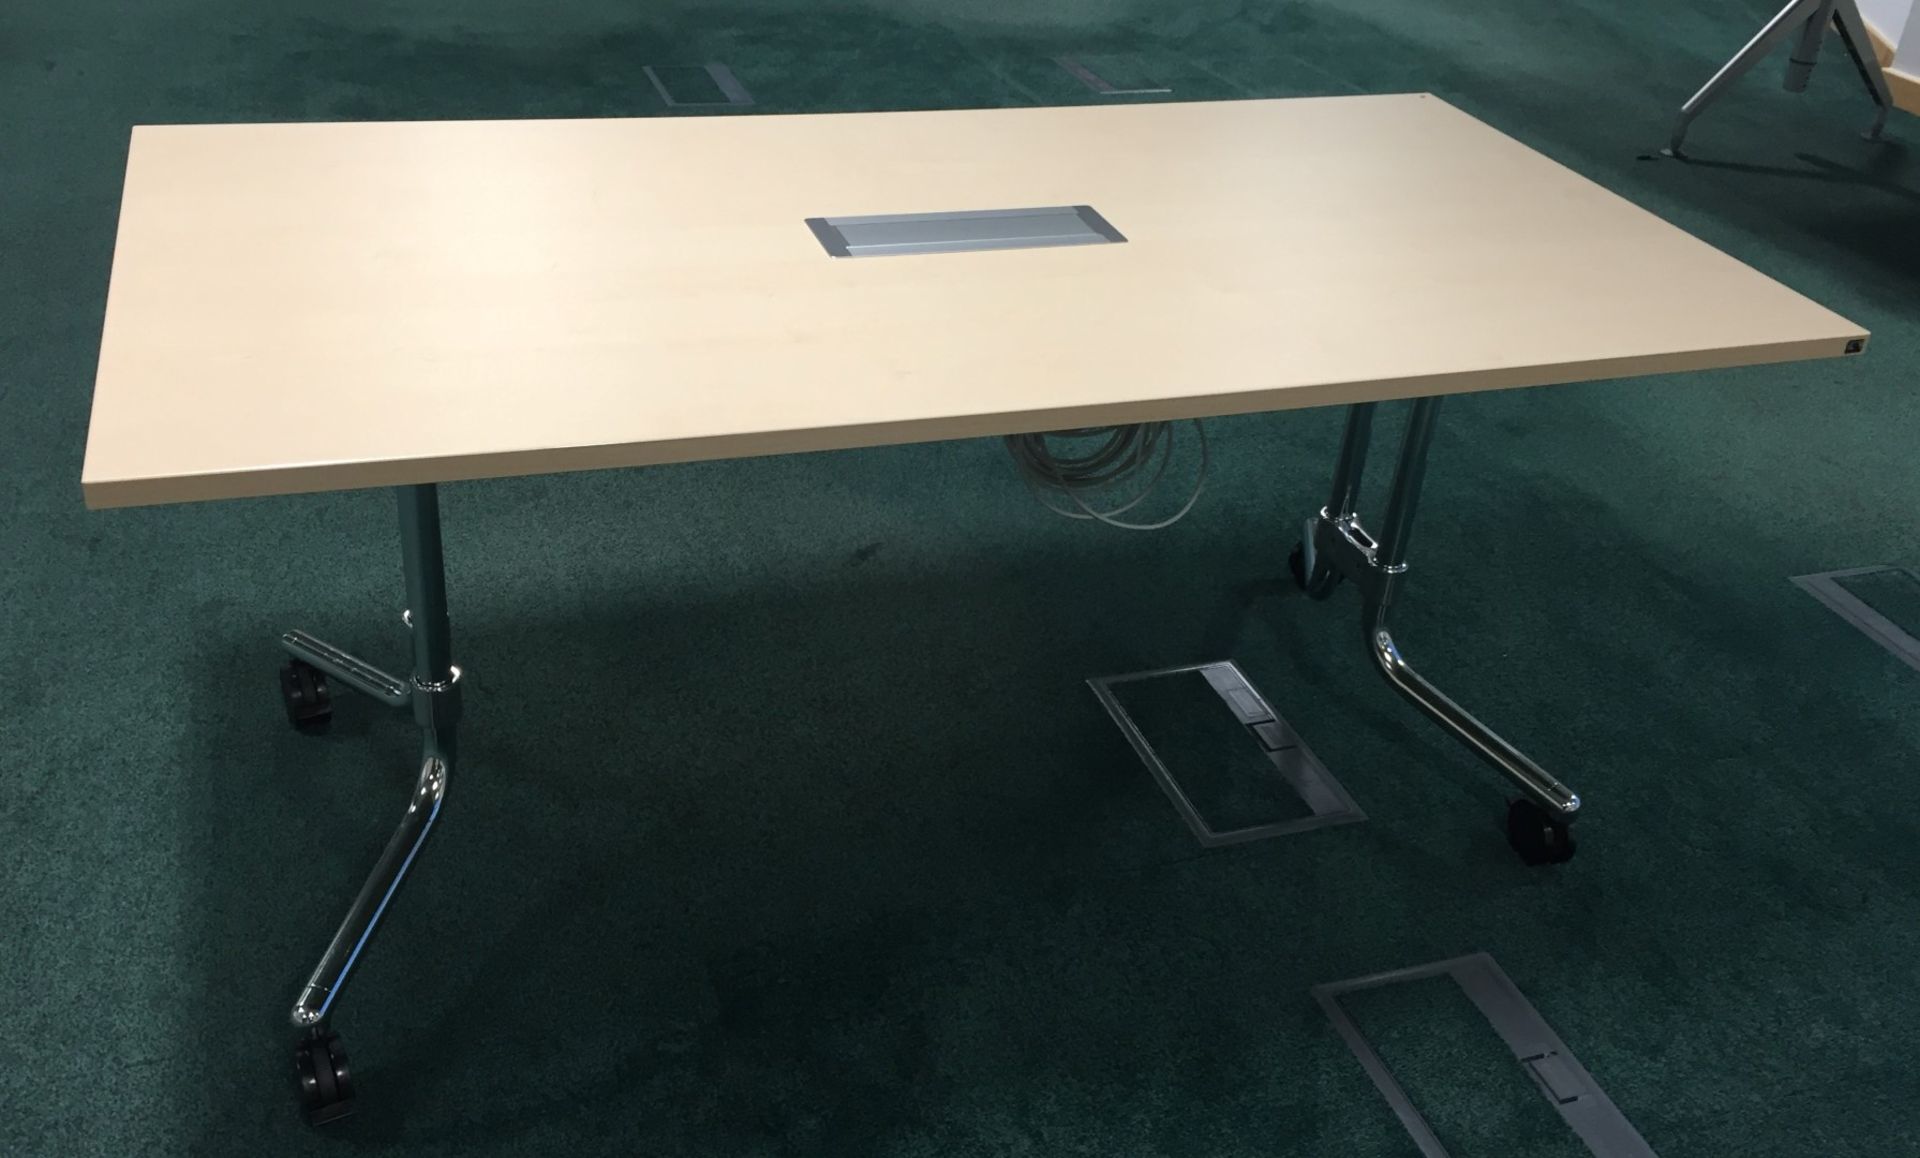 1 x Konig & Neurath Rectangular Fold Away Group Desk / Meeting Table - Mobile Fold Away Desk With - Image 8 of 11